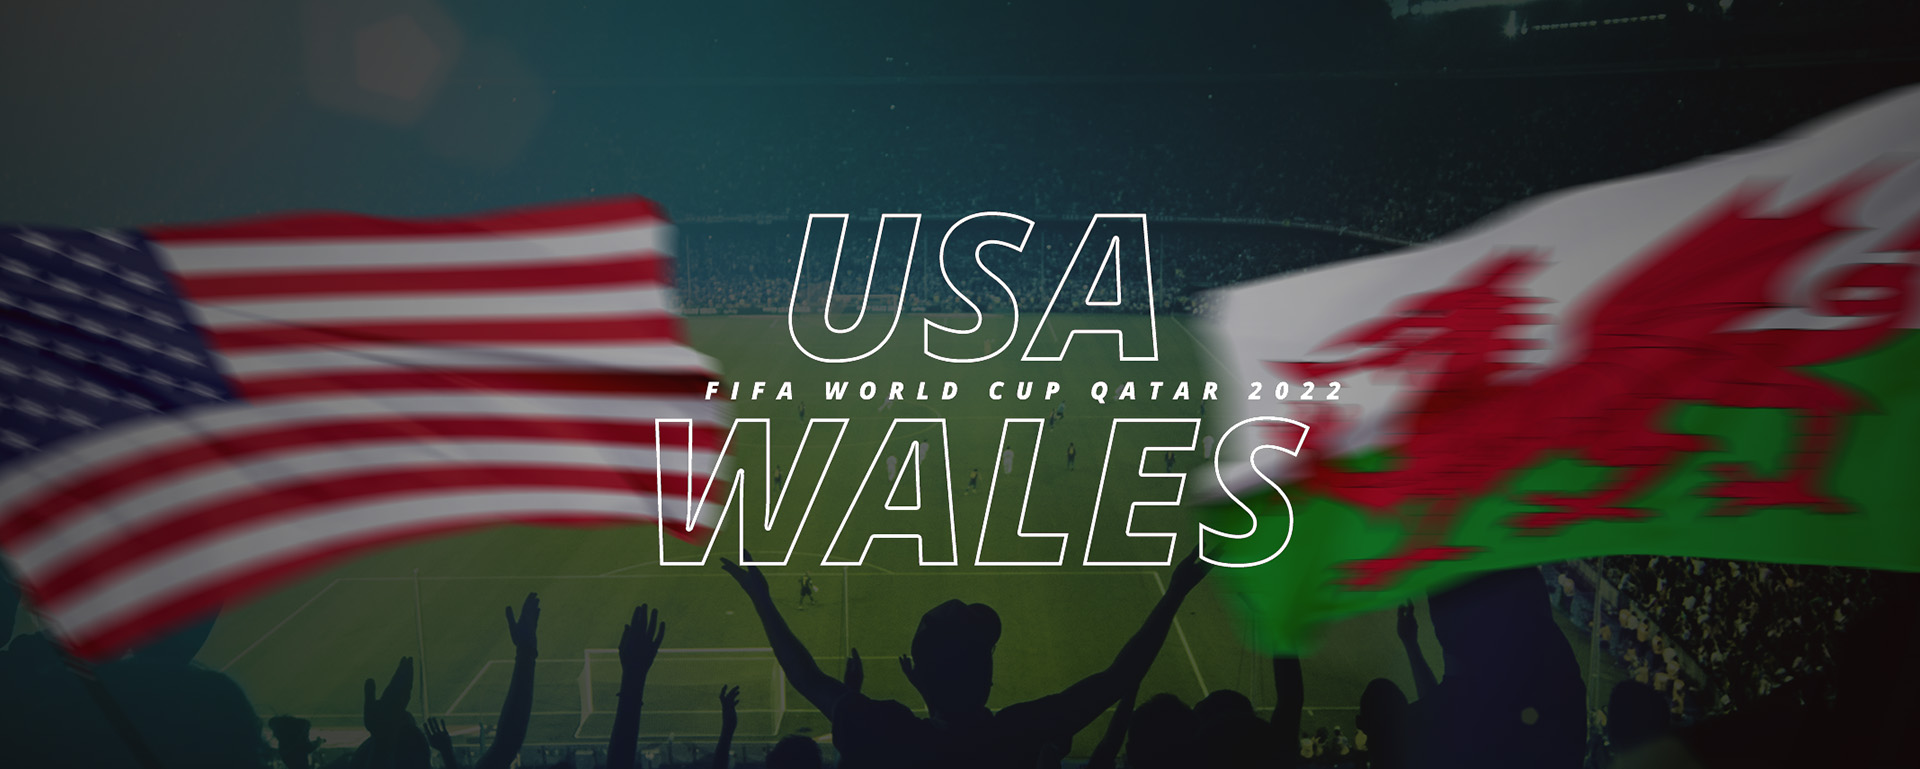 USA VS WALES | FIFA WORLD CUP QATAR 2022